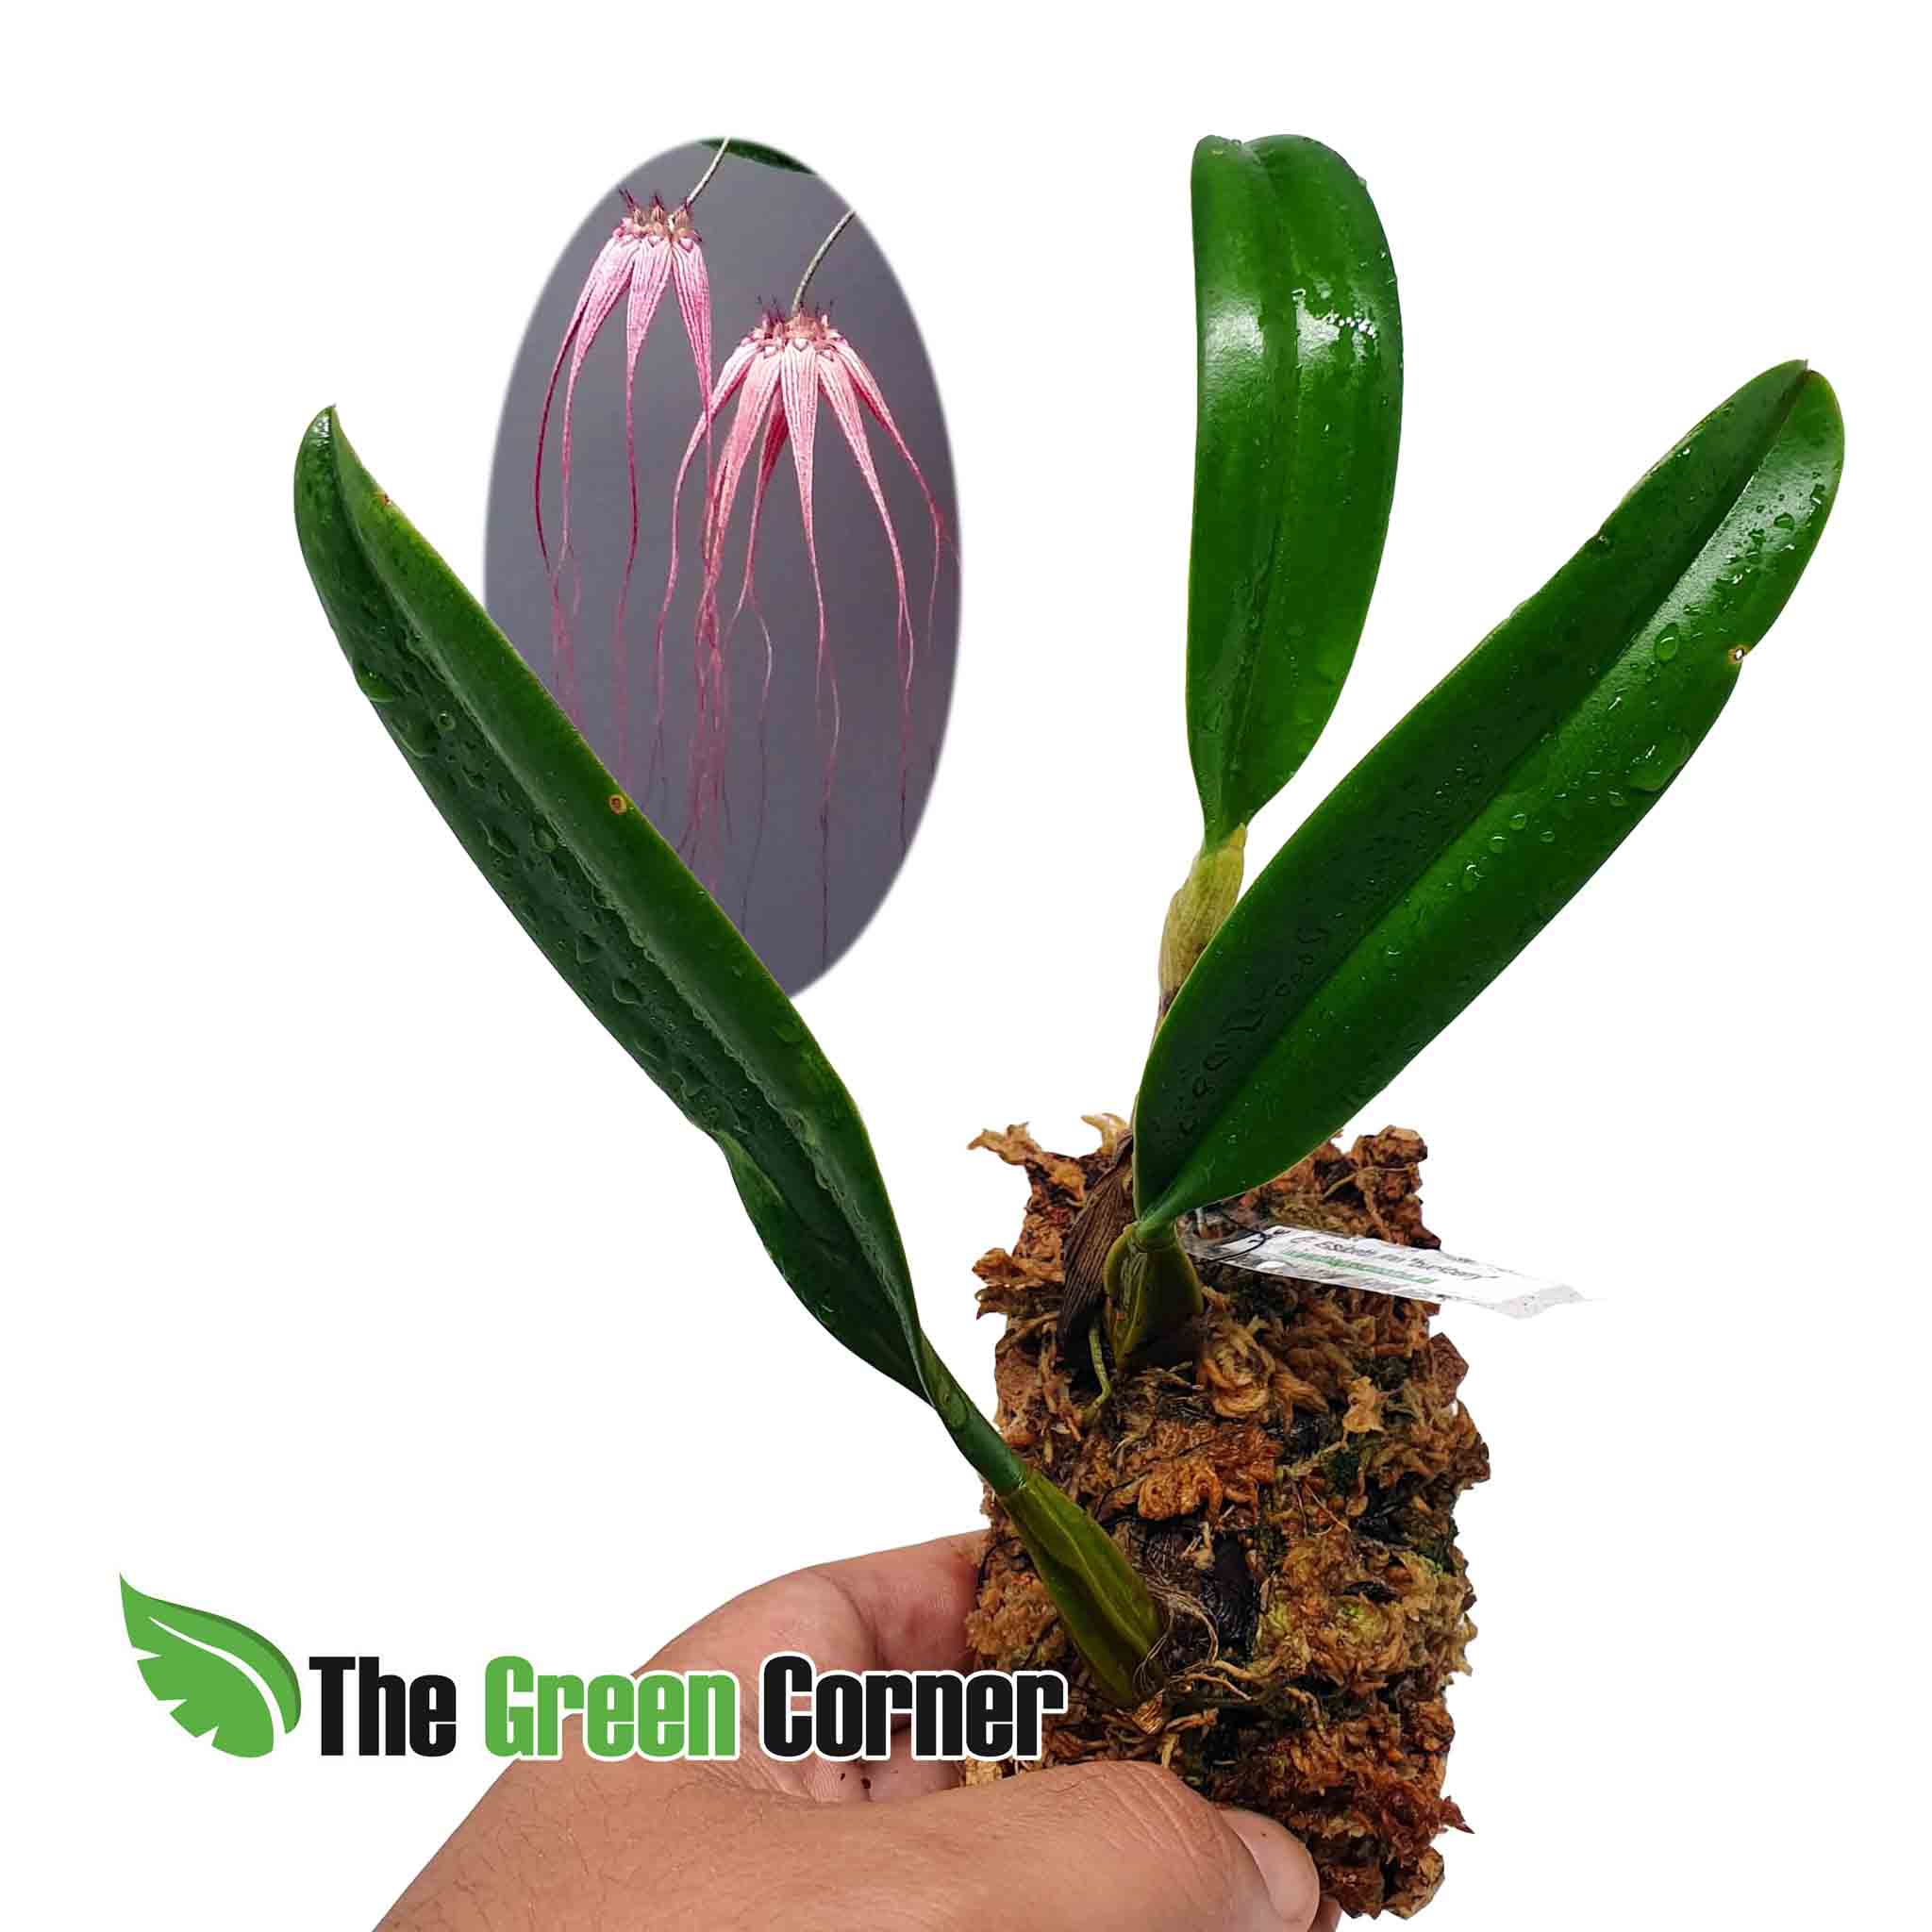 Bulbophyllum Elizabeth Ann 'Buckleberry': posiblemente el bulbophyllum mas cotizado